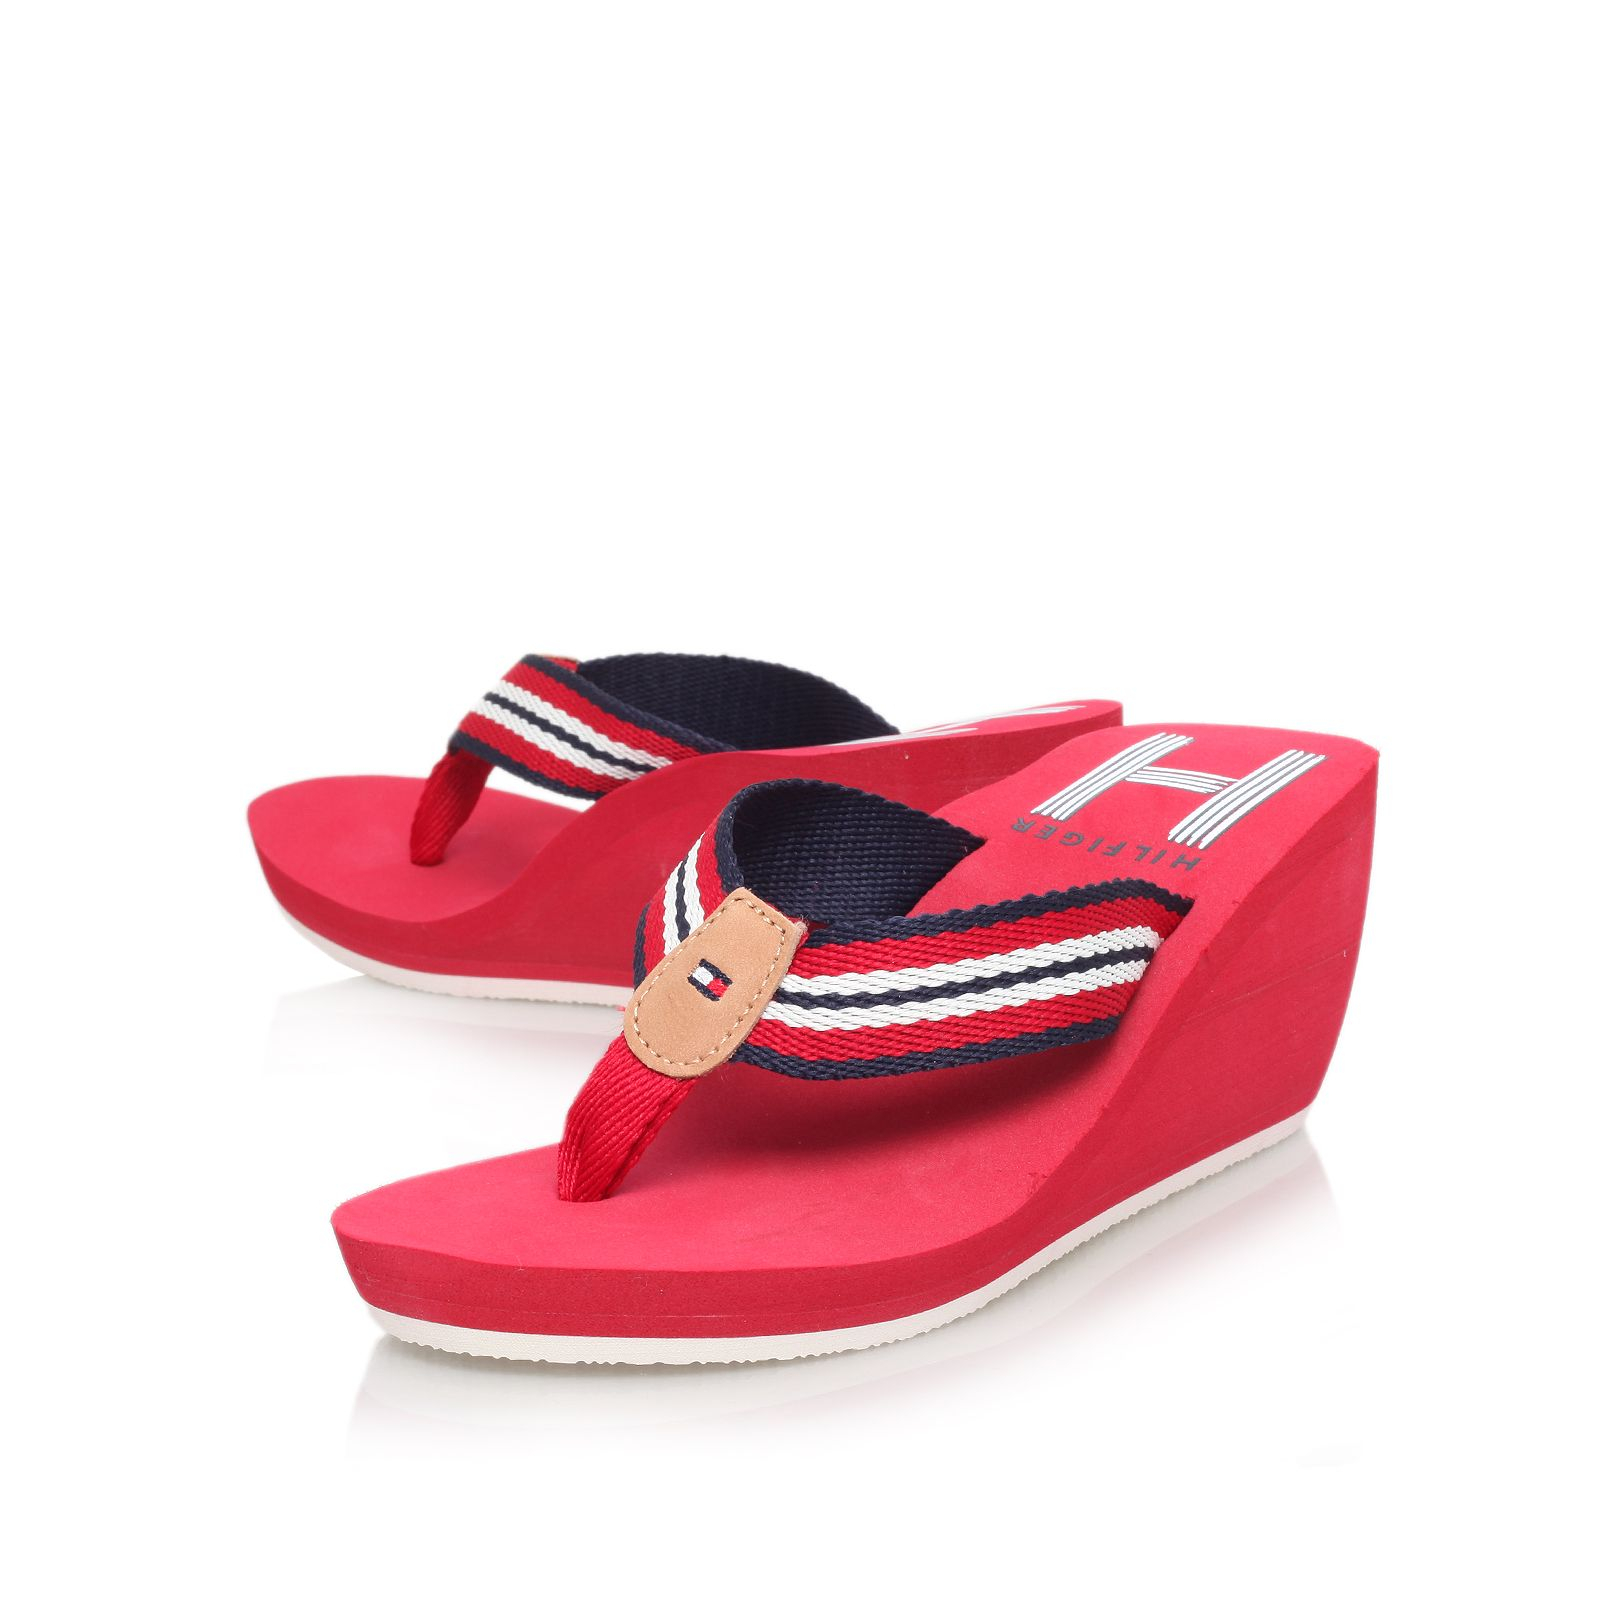 Tommy Hilfiger Myriam 10d Low Wedge Heel Sandals in Red (Pink) - Lyst